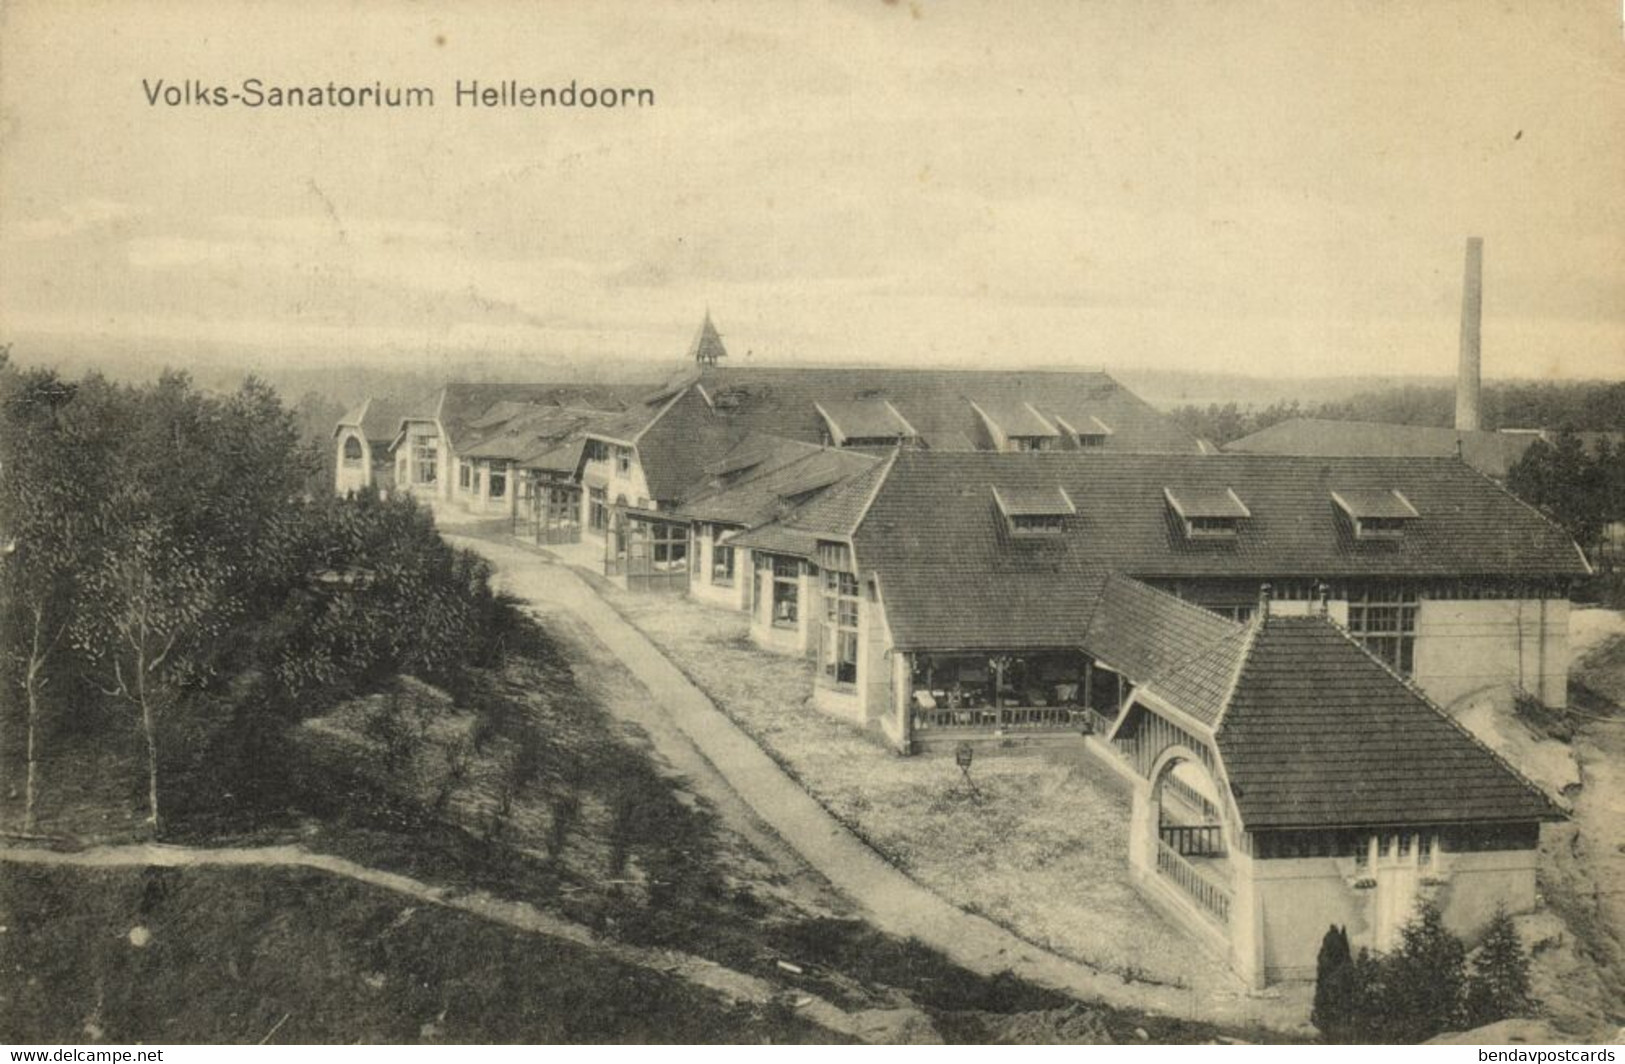 Nederland, HELLENDOORN, Volks-Sanatorium (1910s) Ansichtkaart - Hellendoorn